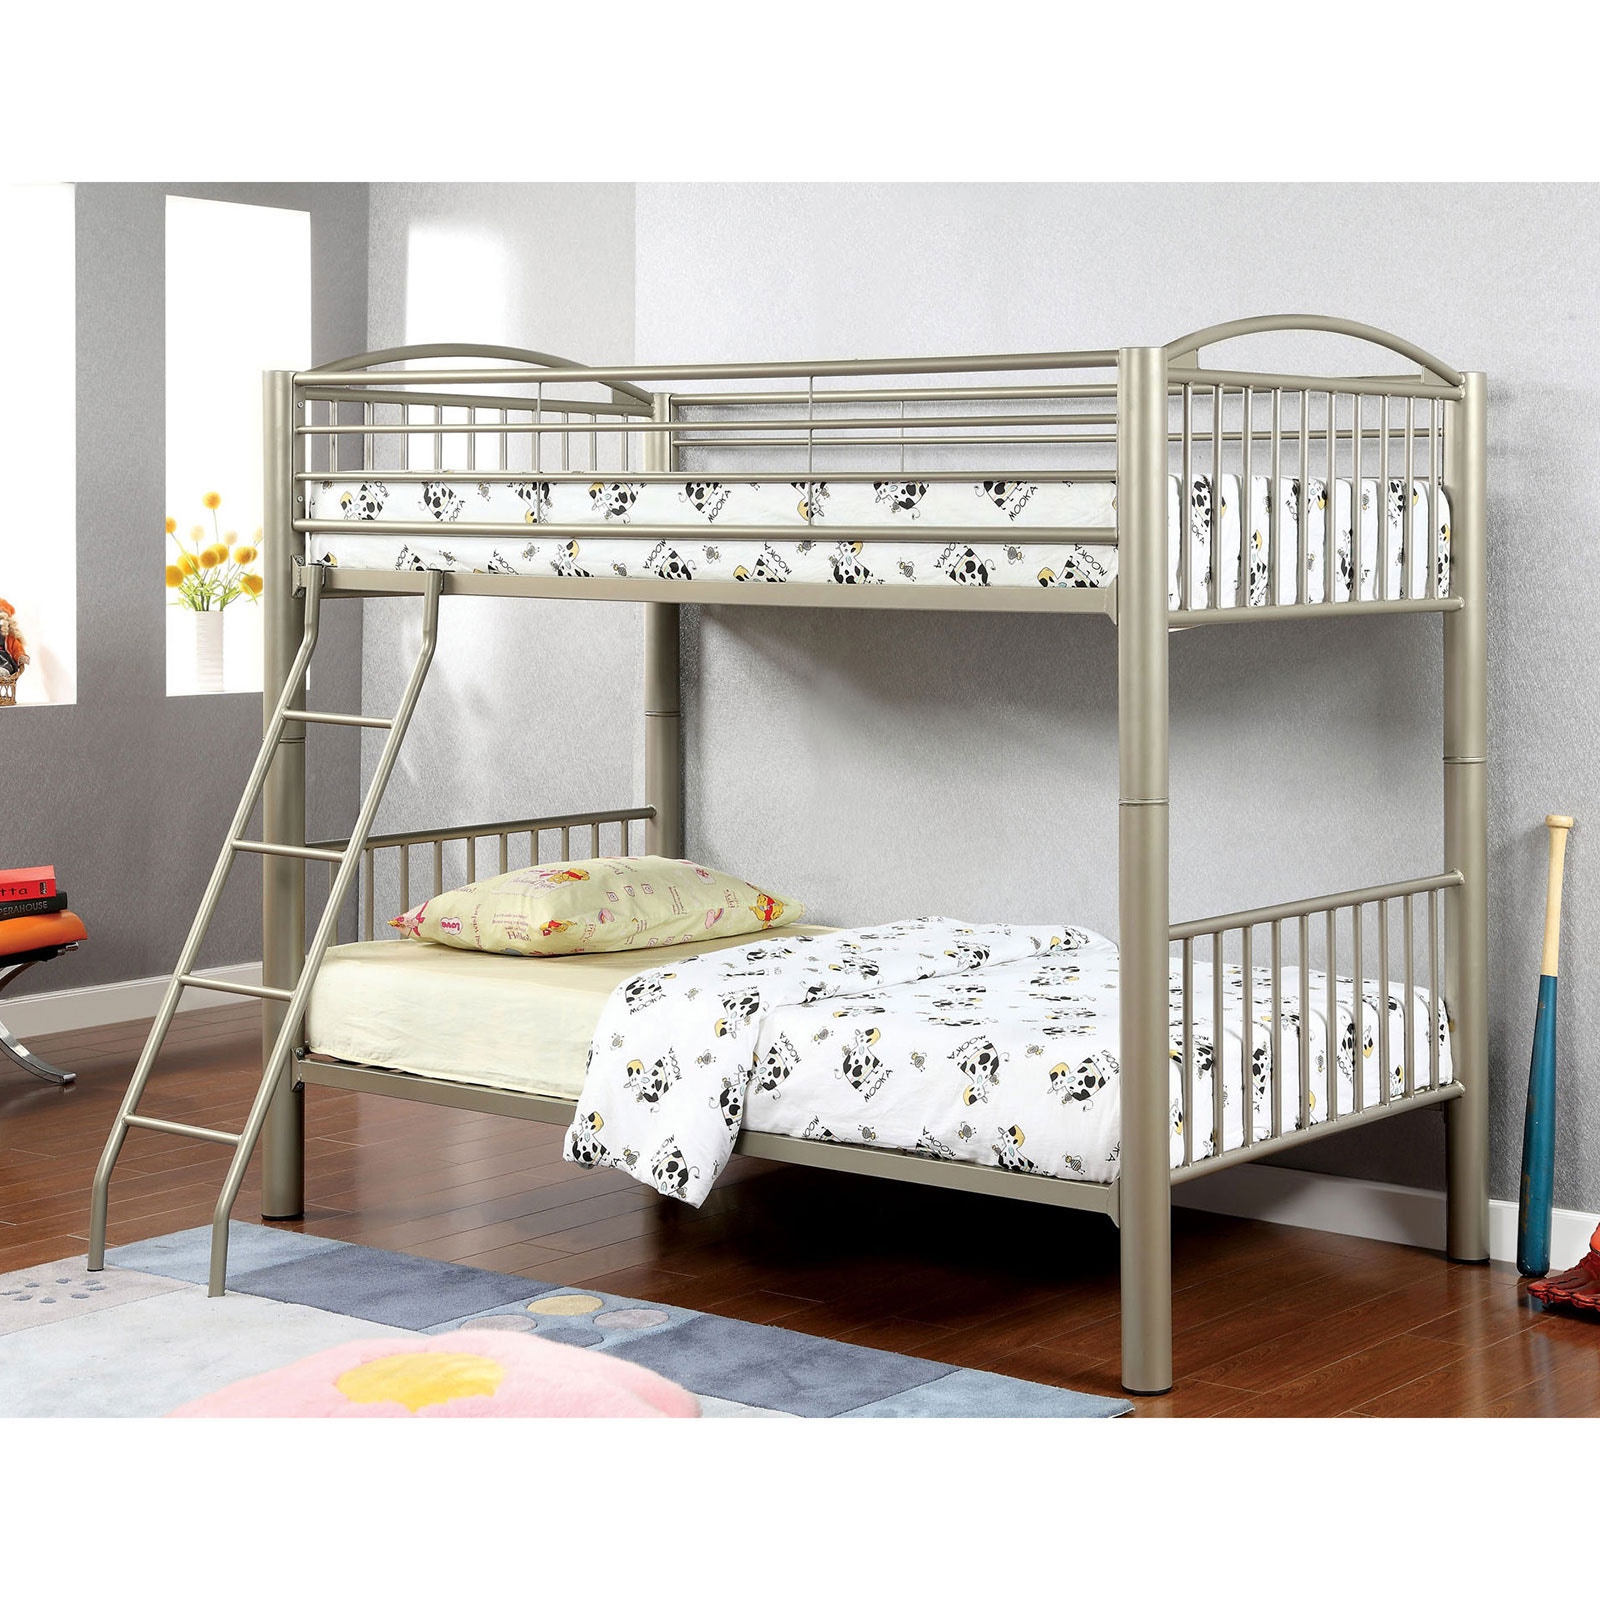 leon's furniture bunk beds